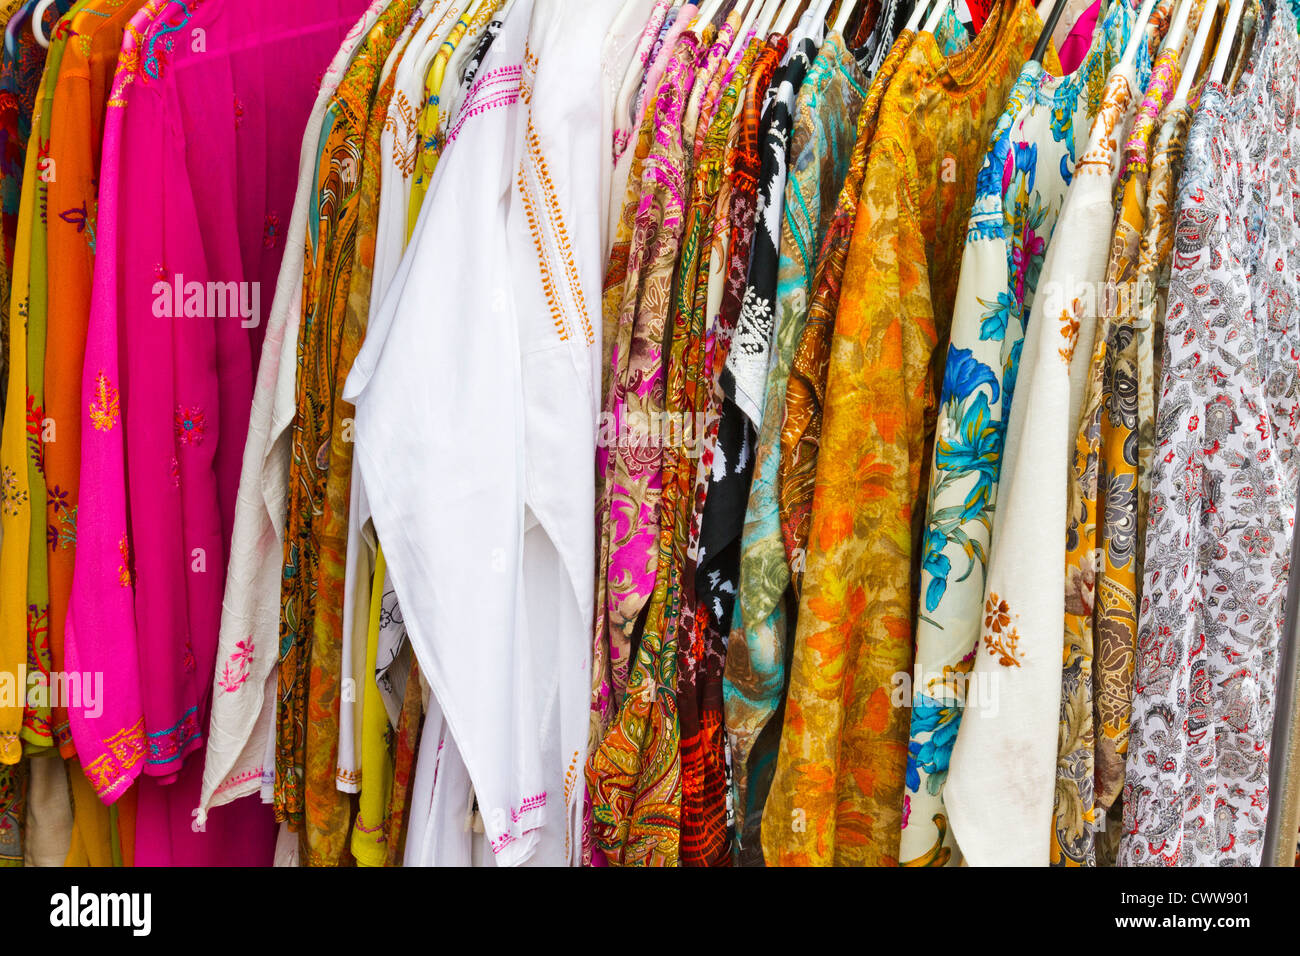 Indian shirts hang in an arcade in 'Santa Barbara', California Stock Photo